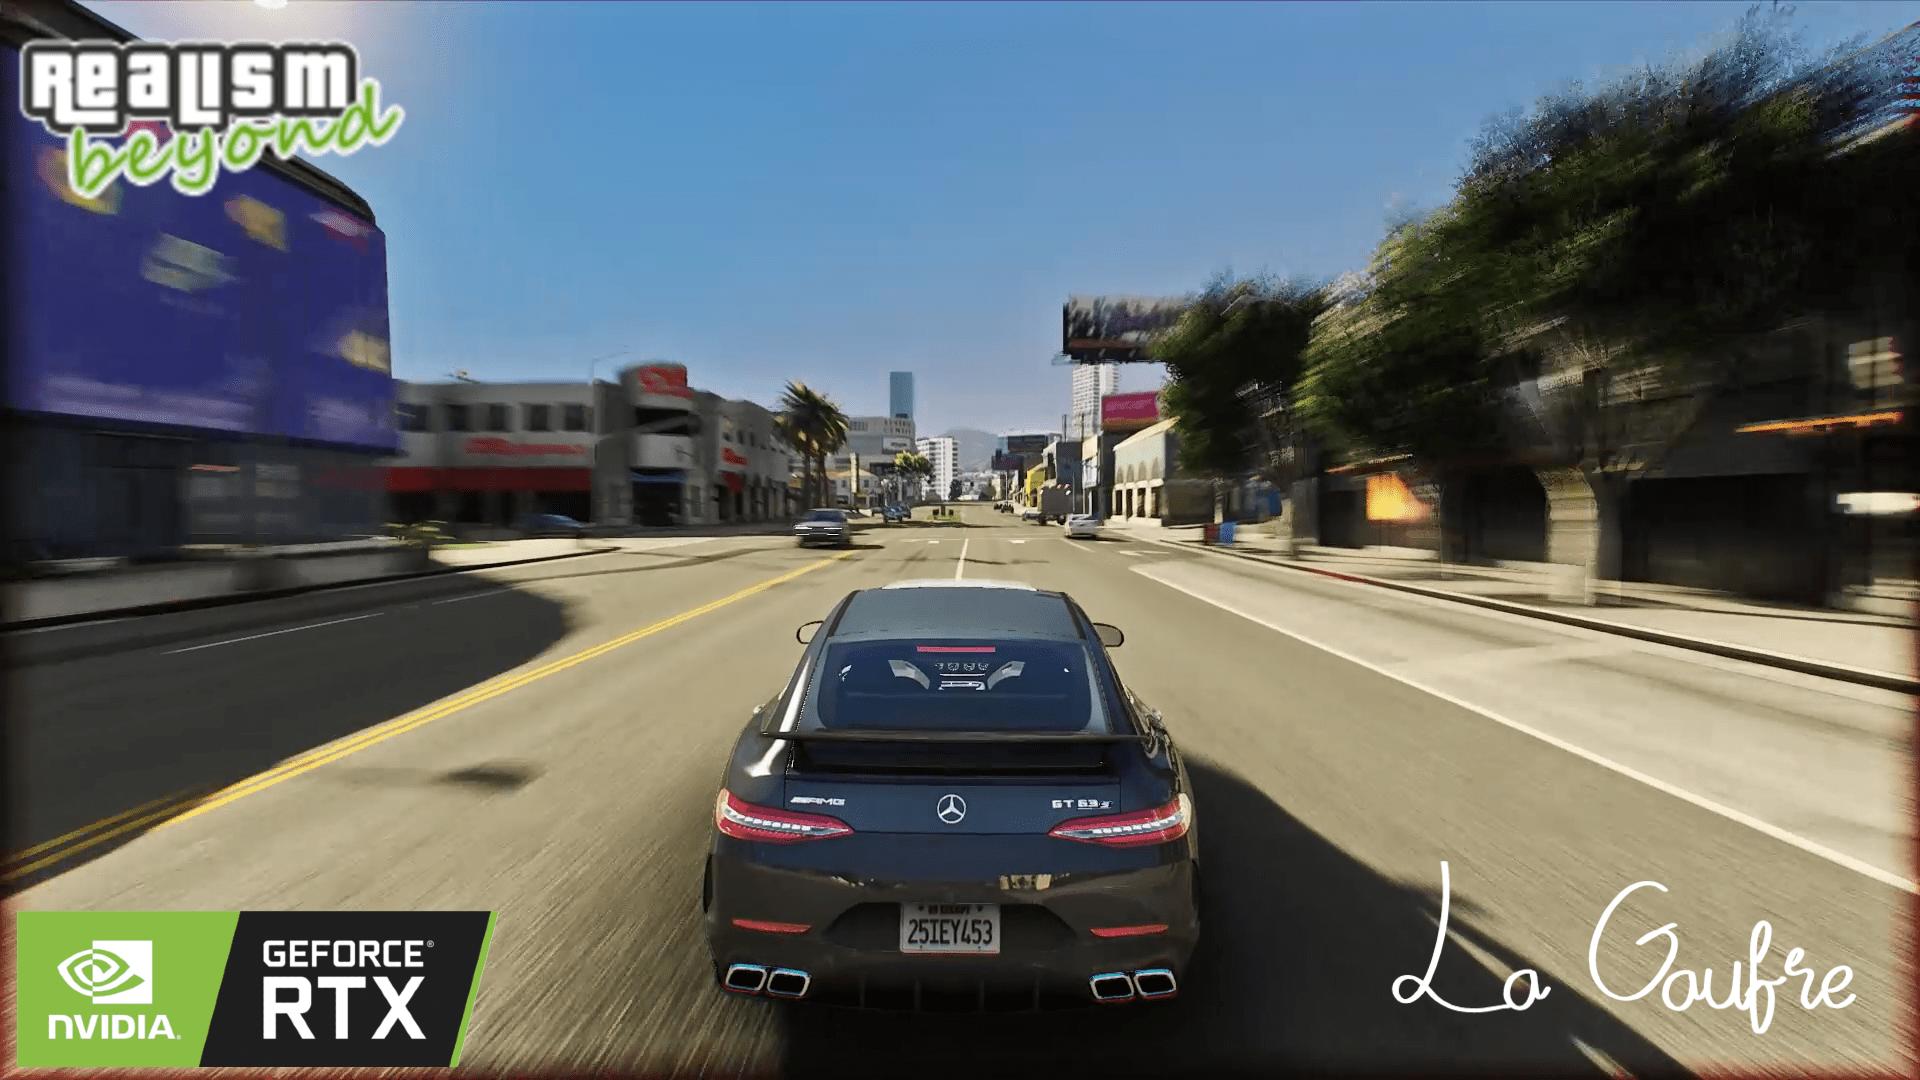 New GTA 5 ray tracing mod